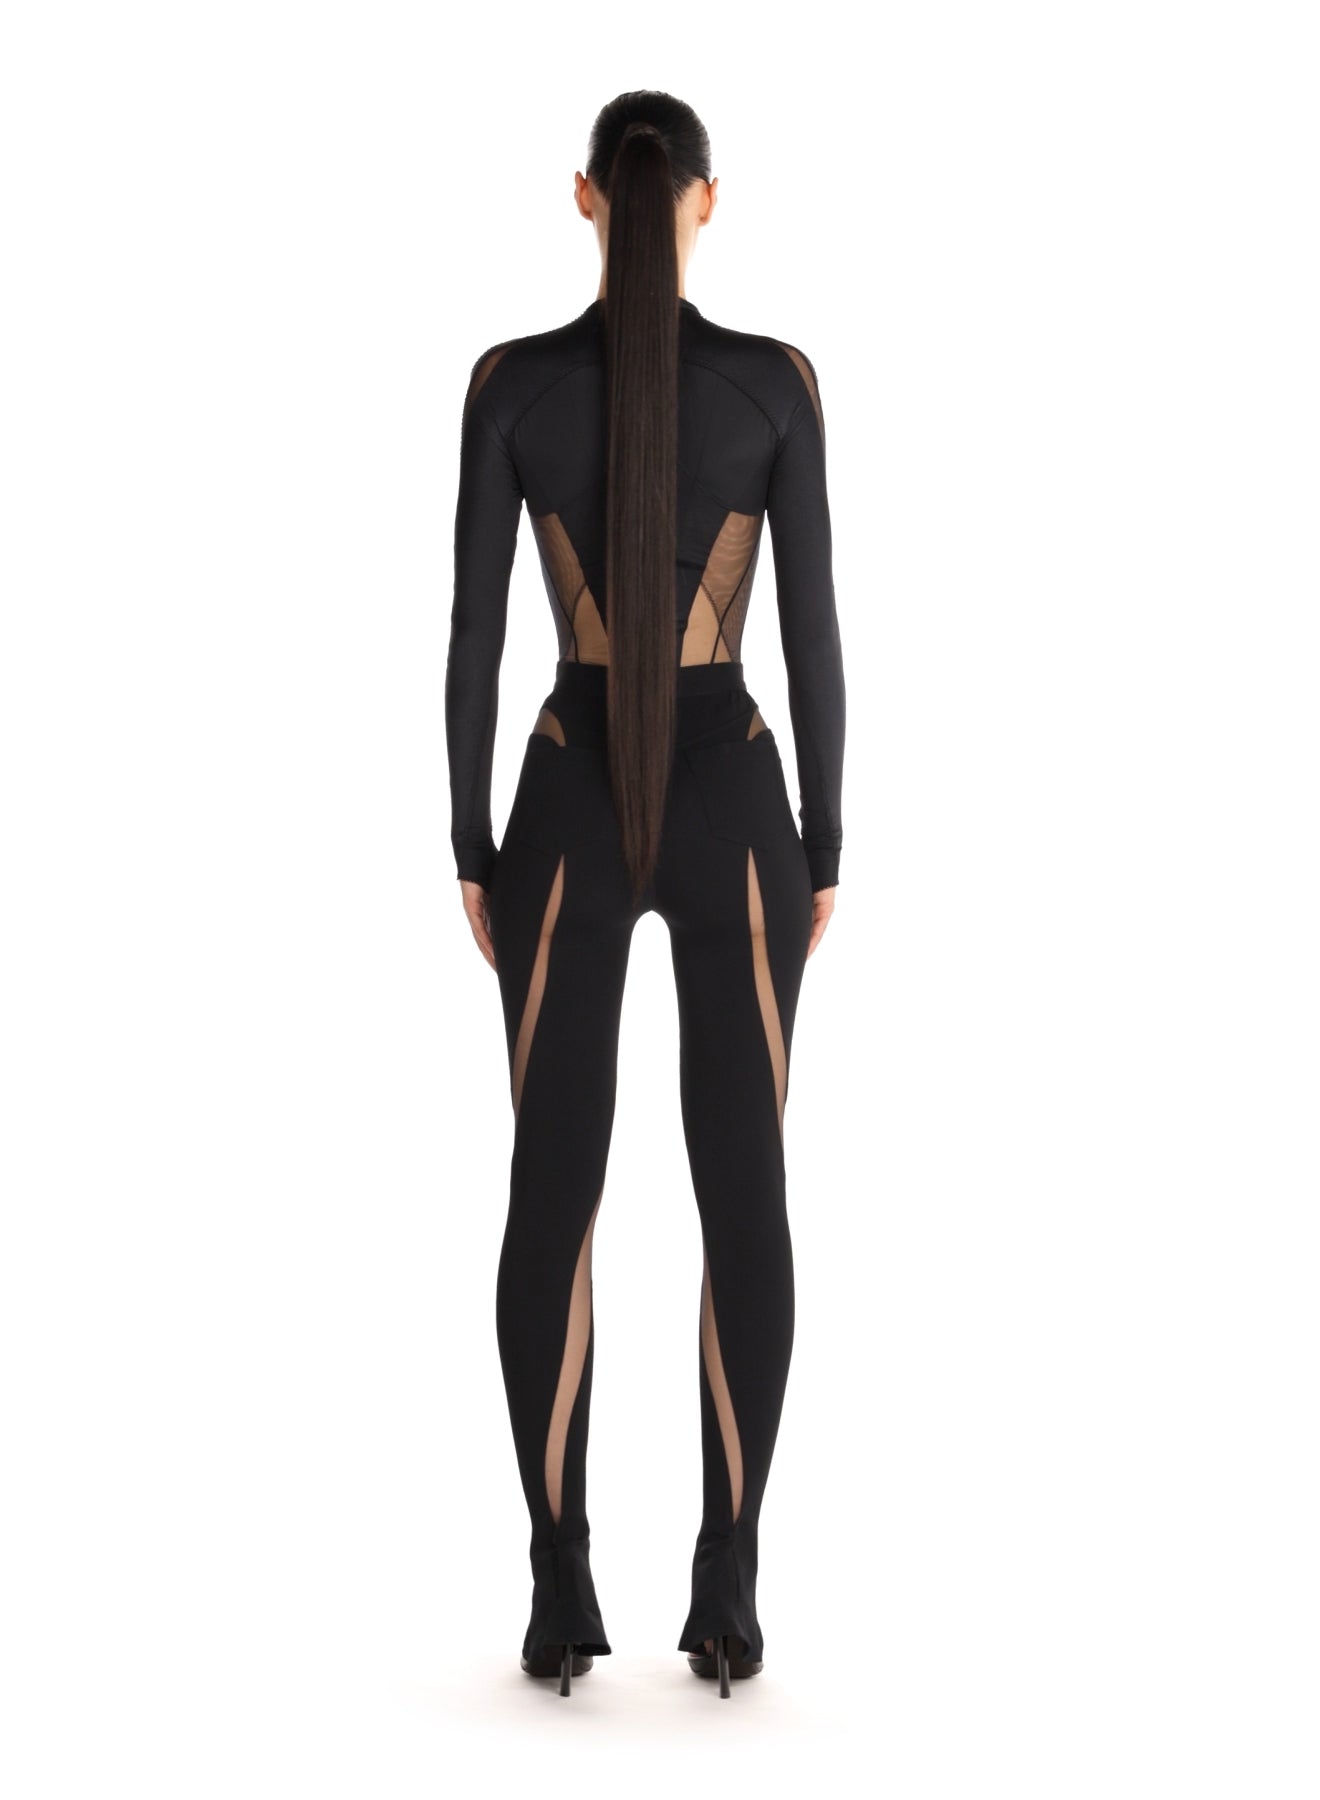 black multi-layer lingerie bodysuit